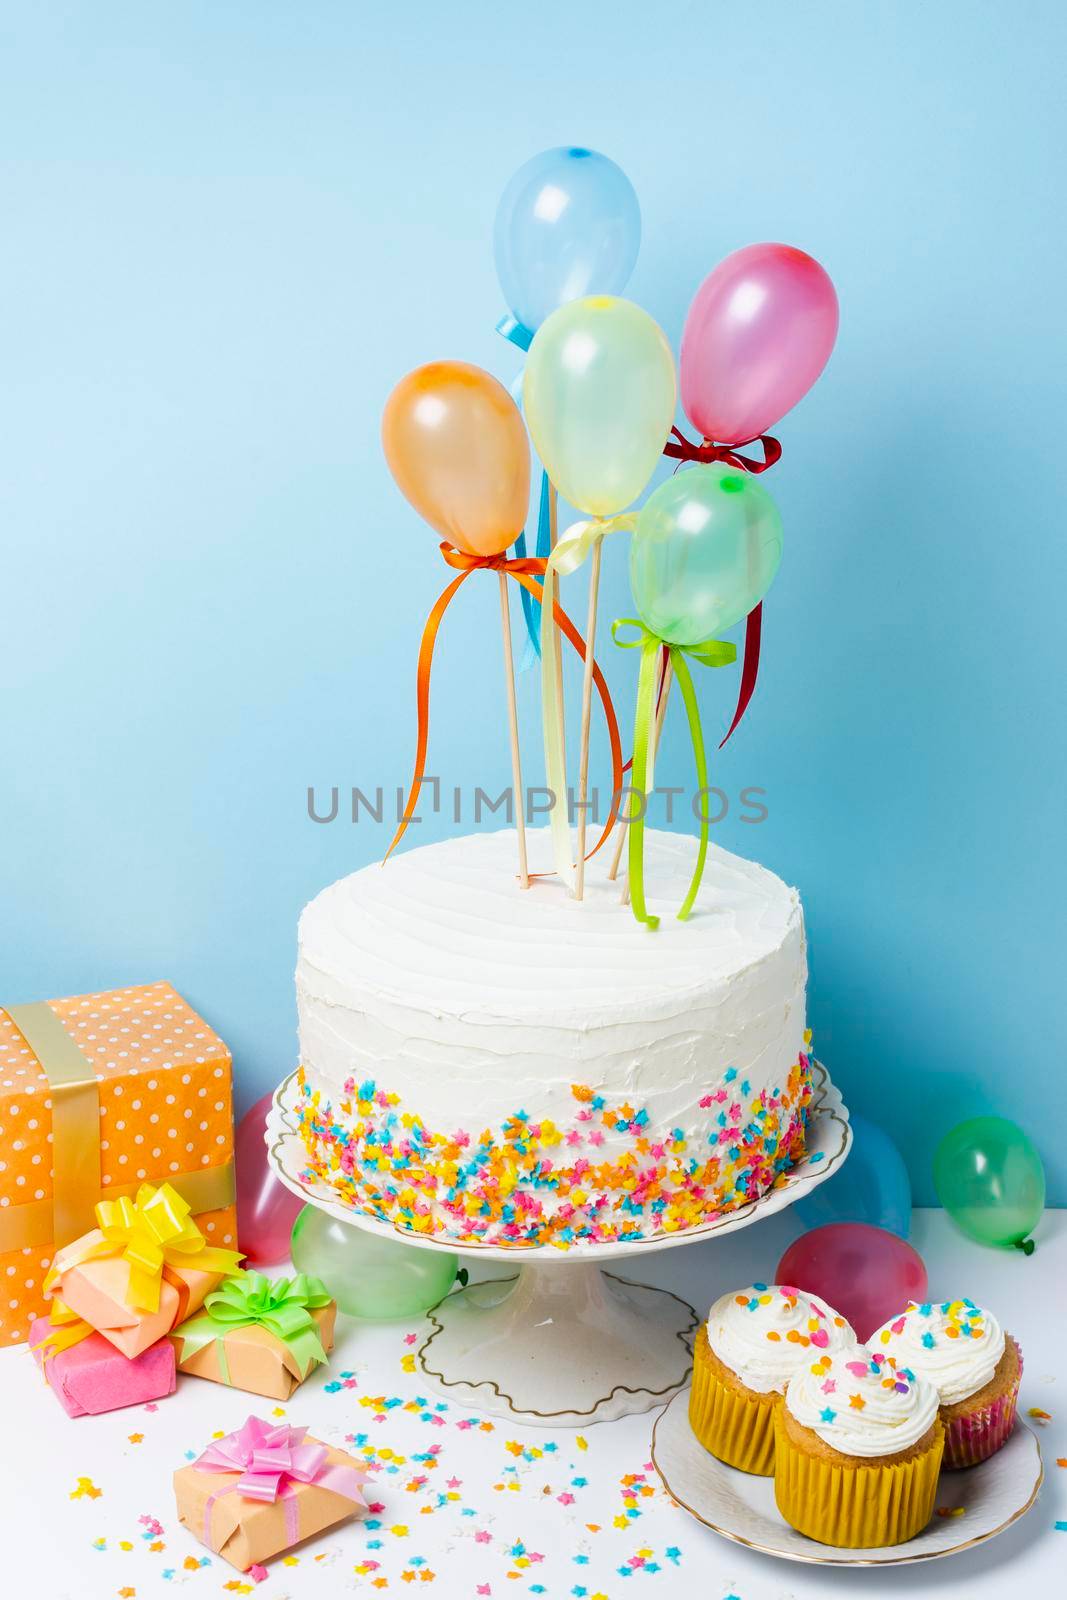 arrangement birthday party concept. High resolution photo